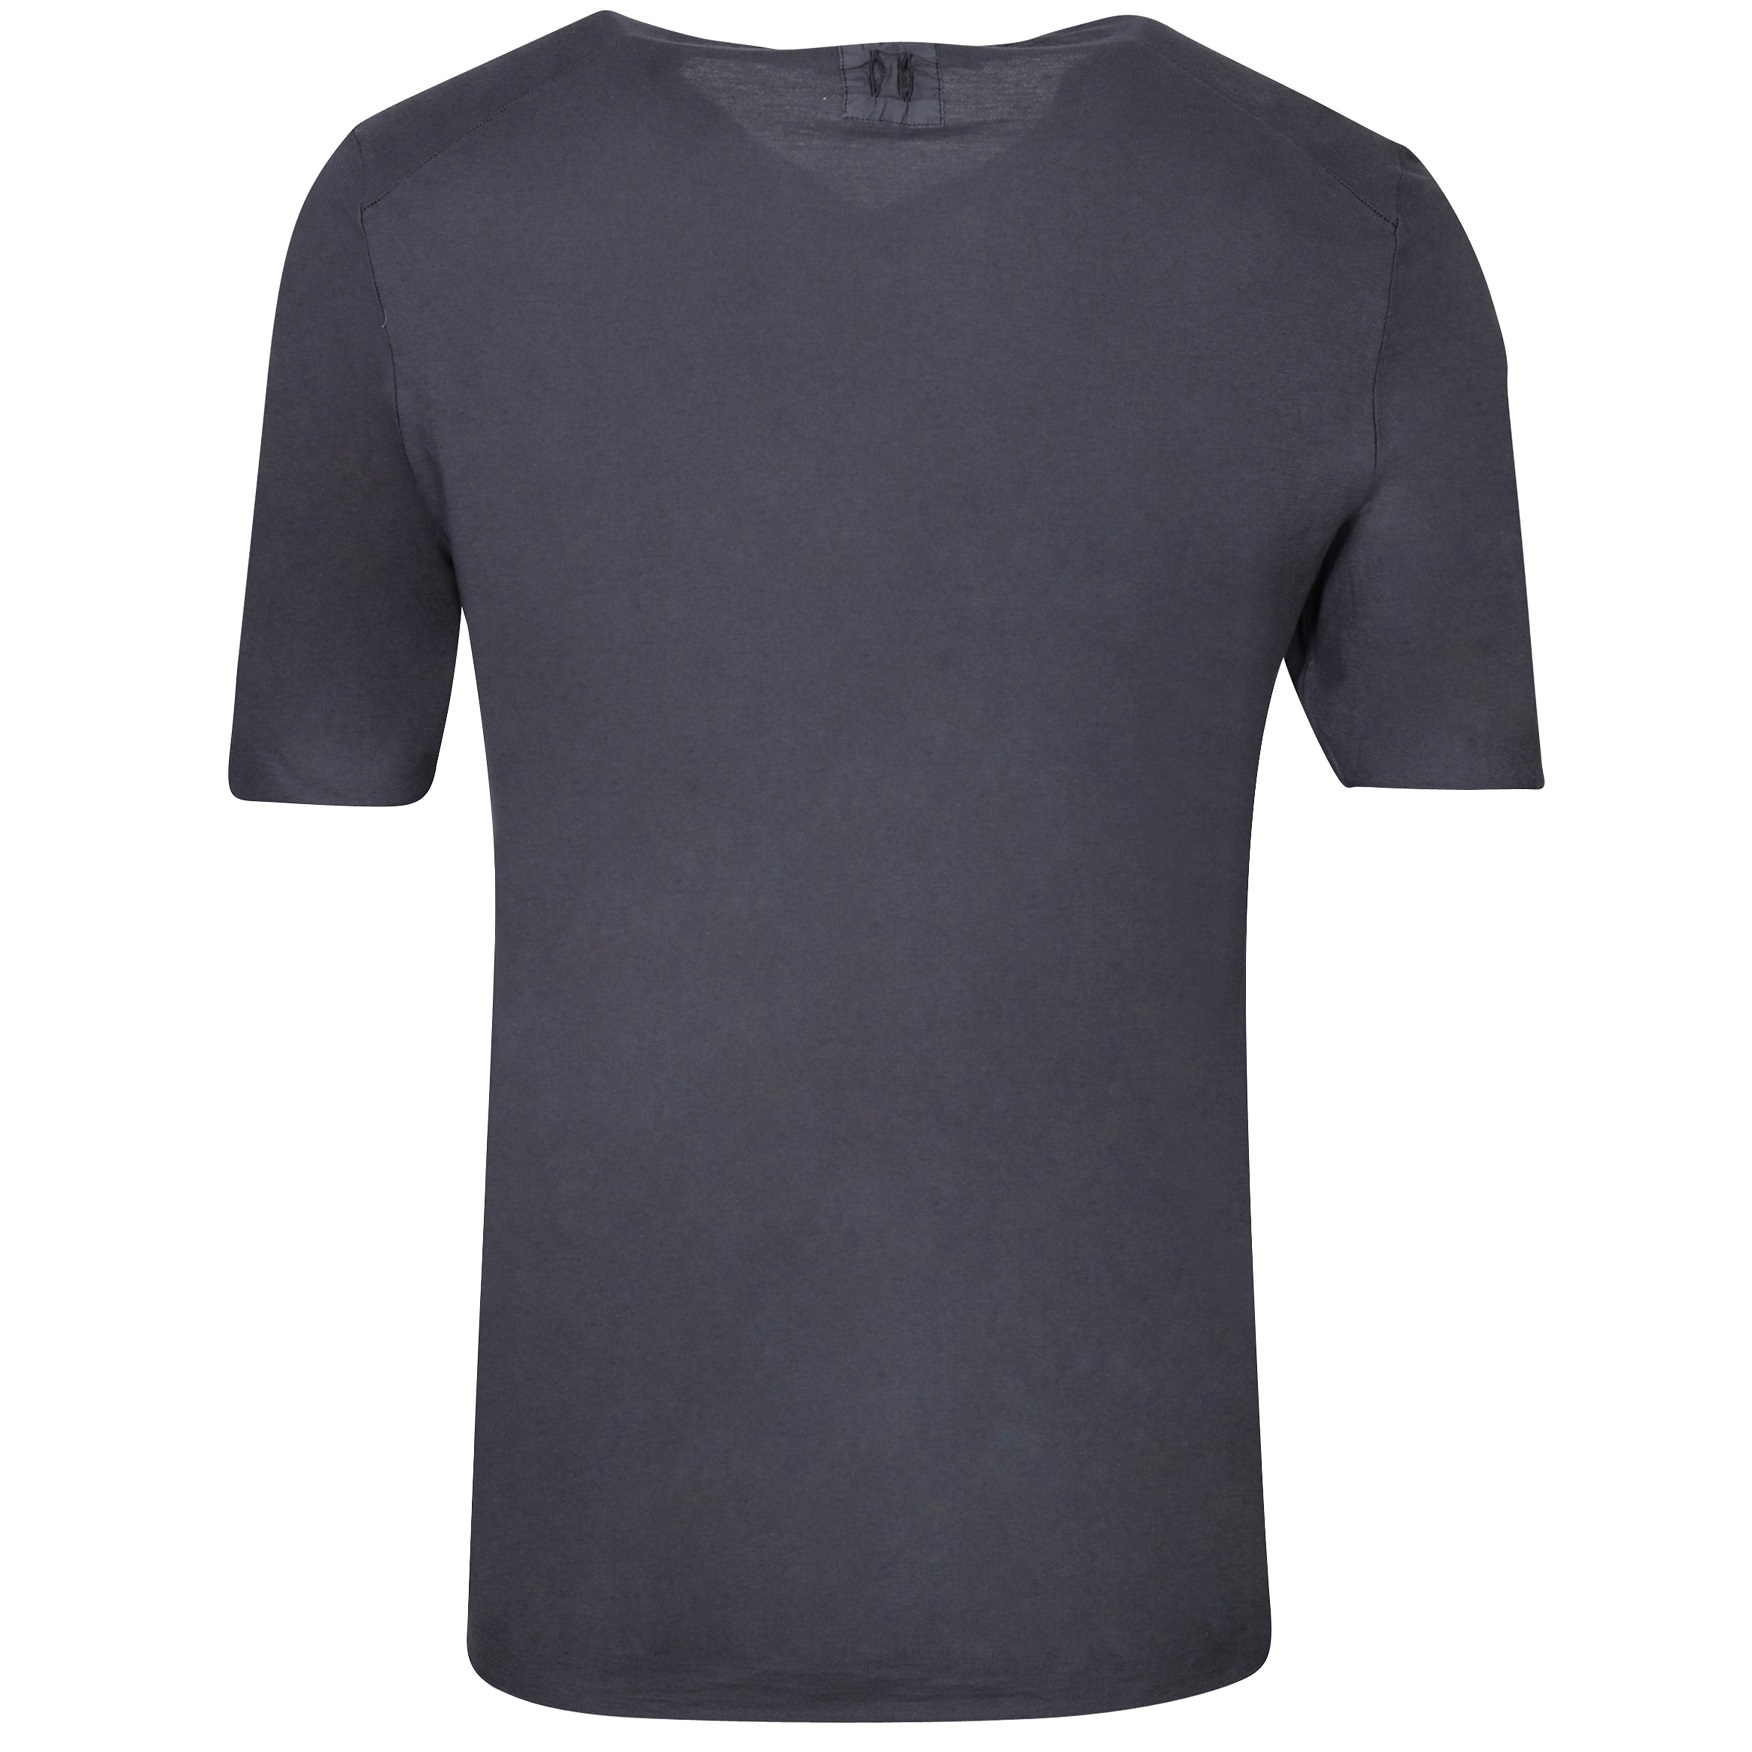 Hannes Roether V-Neck T-Shirt in Posh XXL